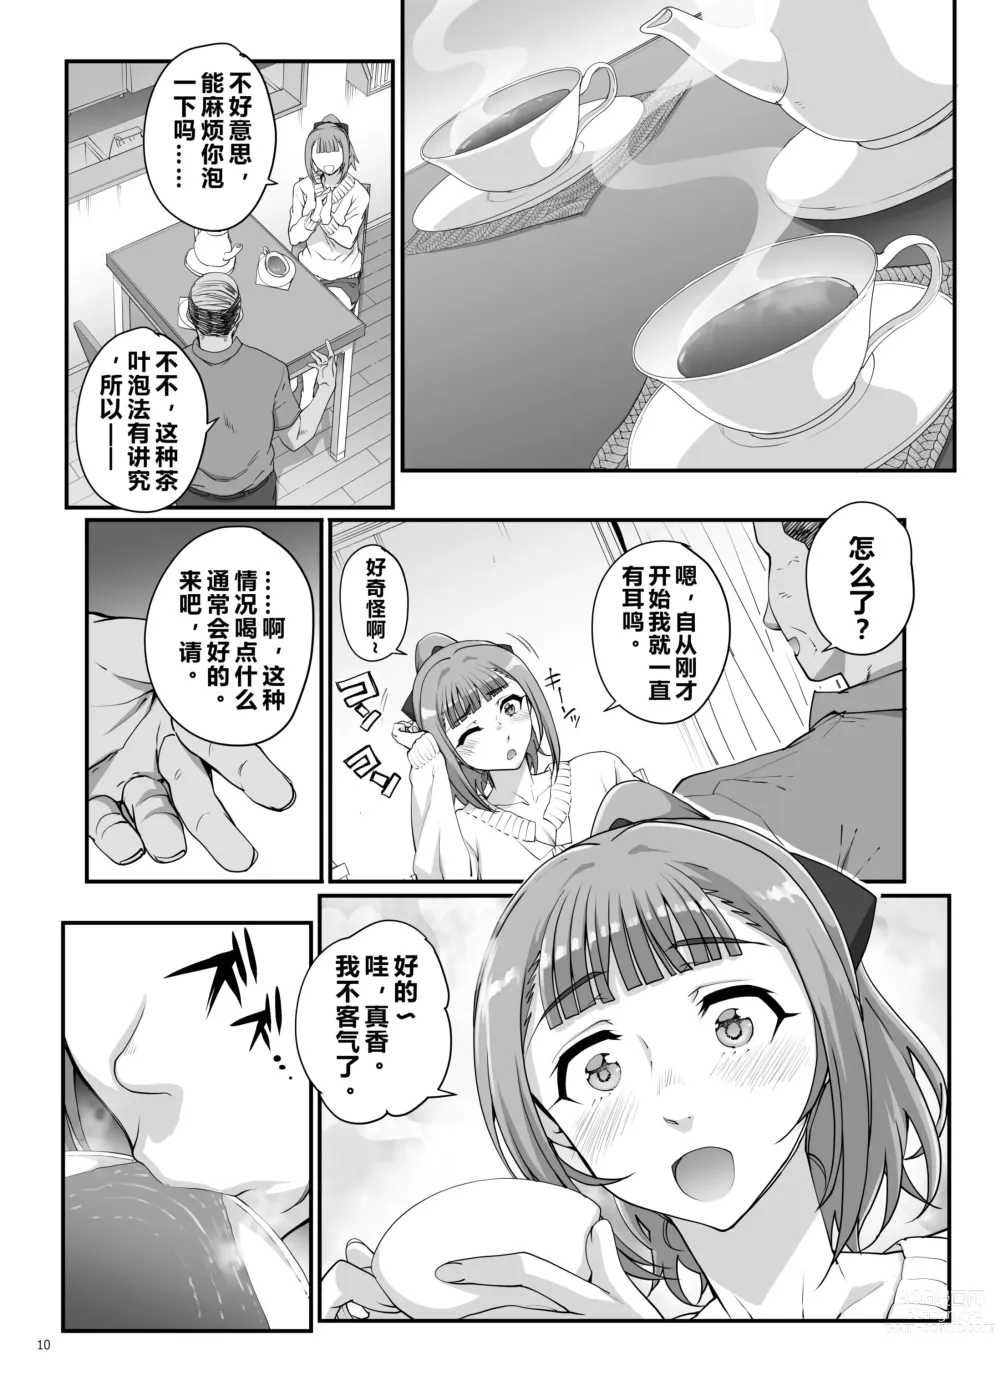 Page 11 of doujinshi 小鸟游姐妹的受难